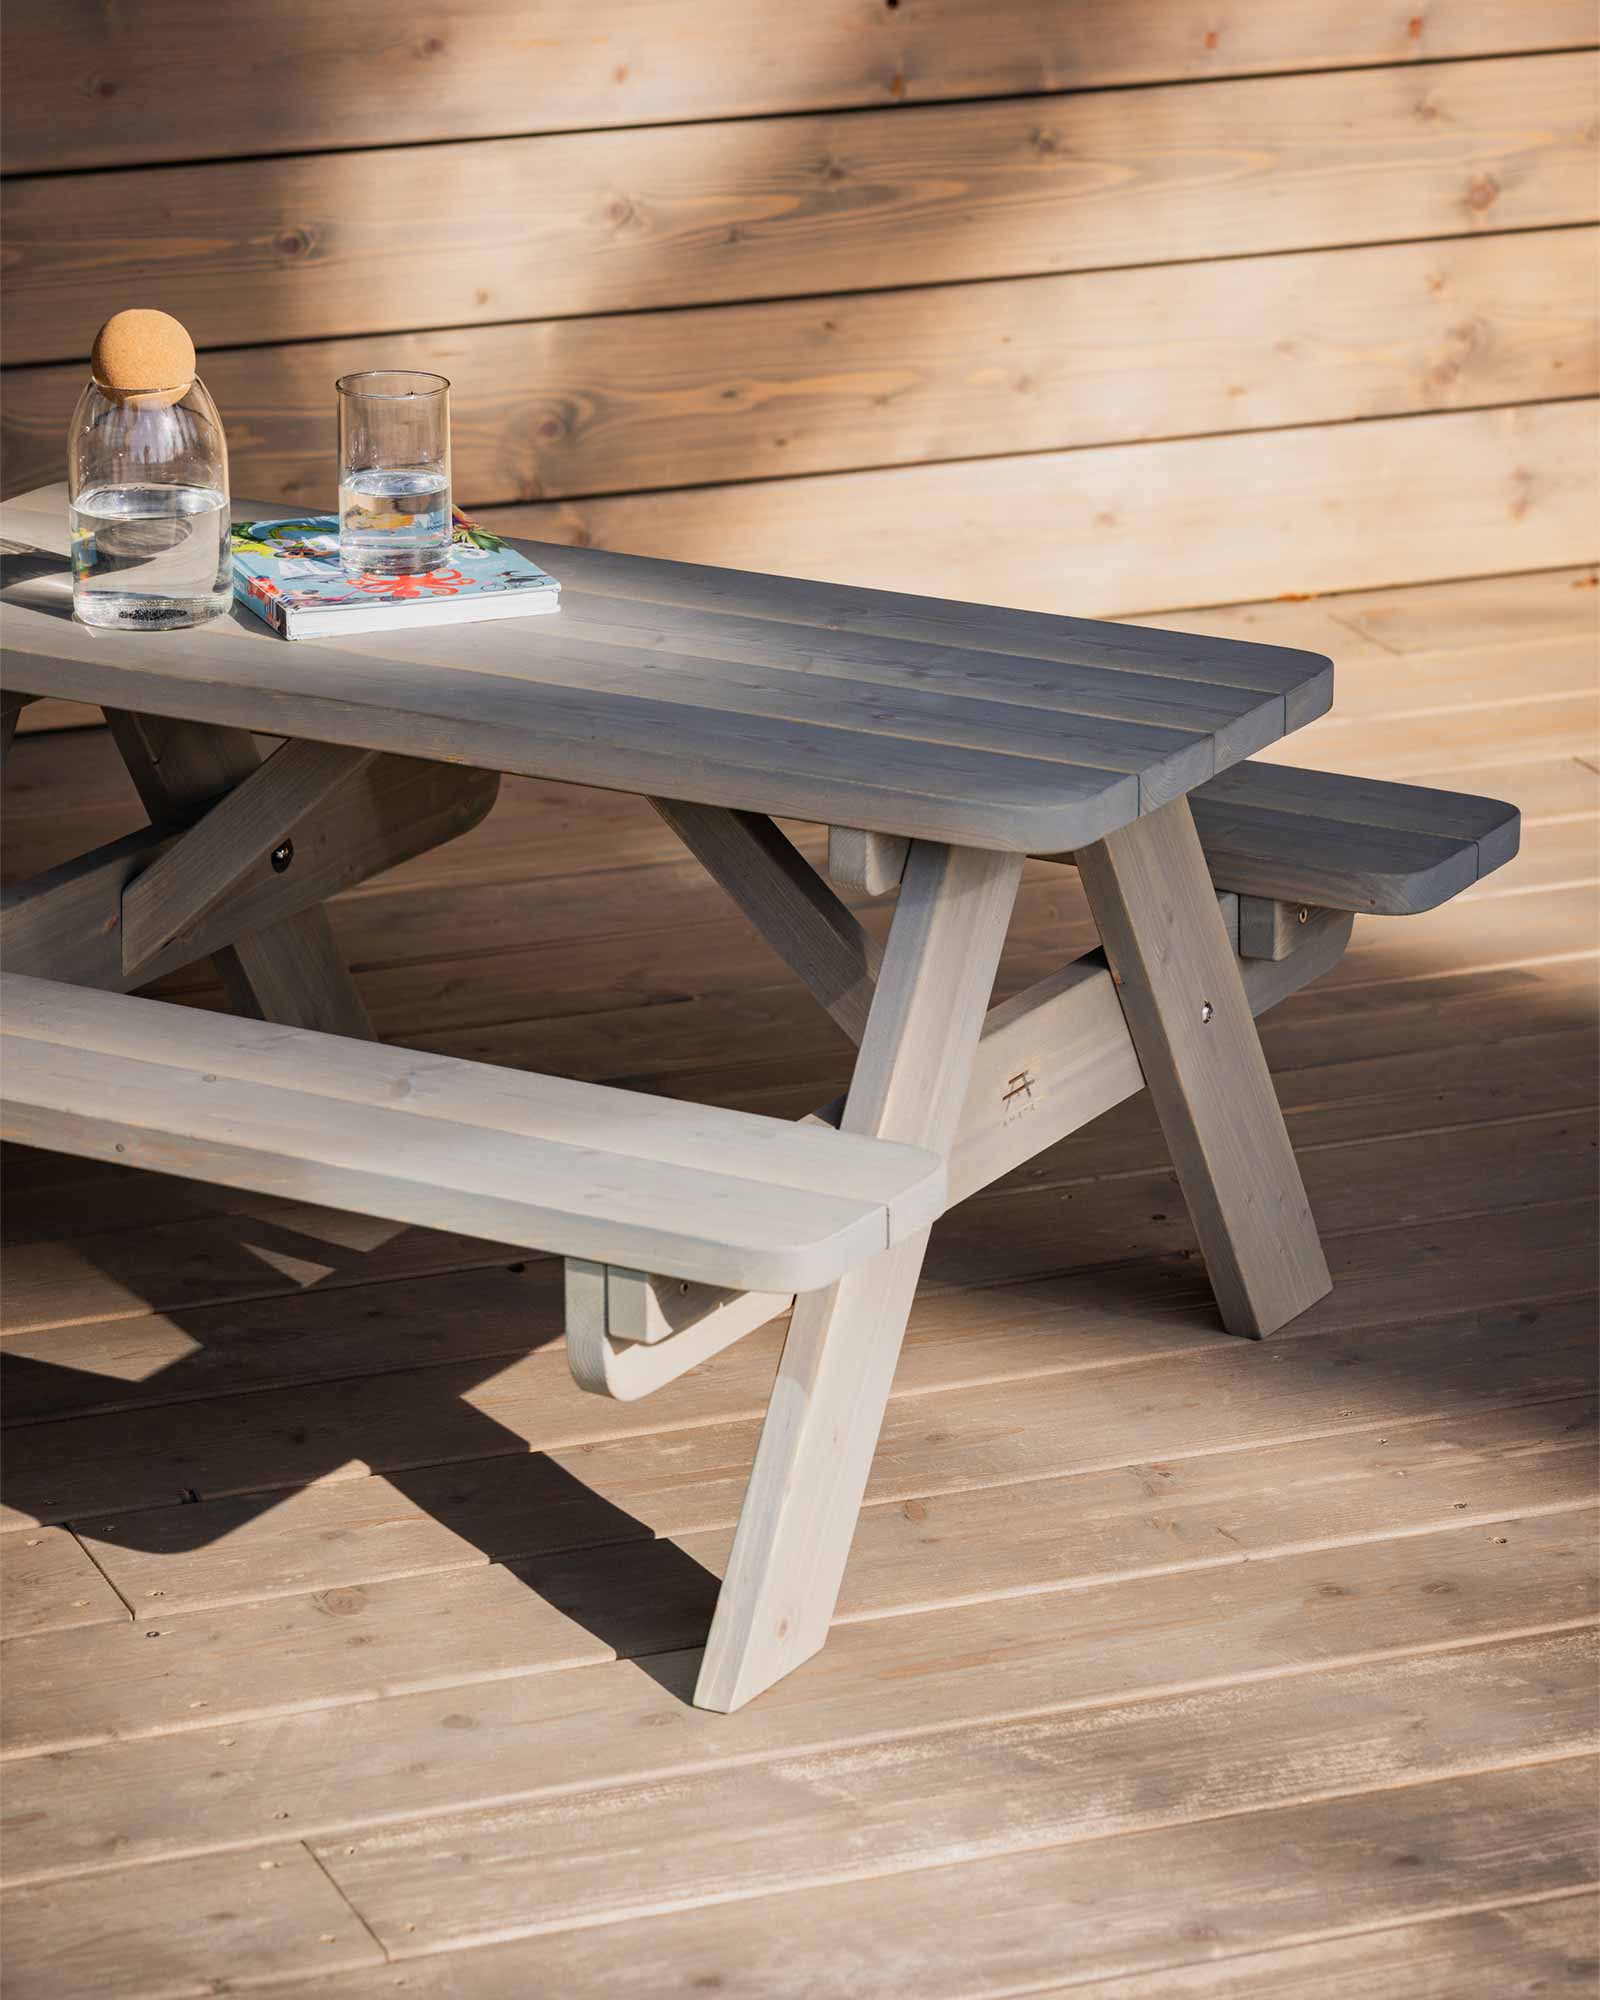 Mini A-frame Wooden Picnic Table Set for Children